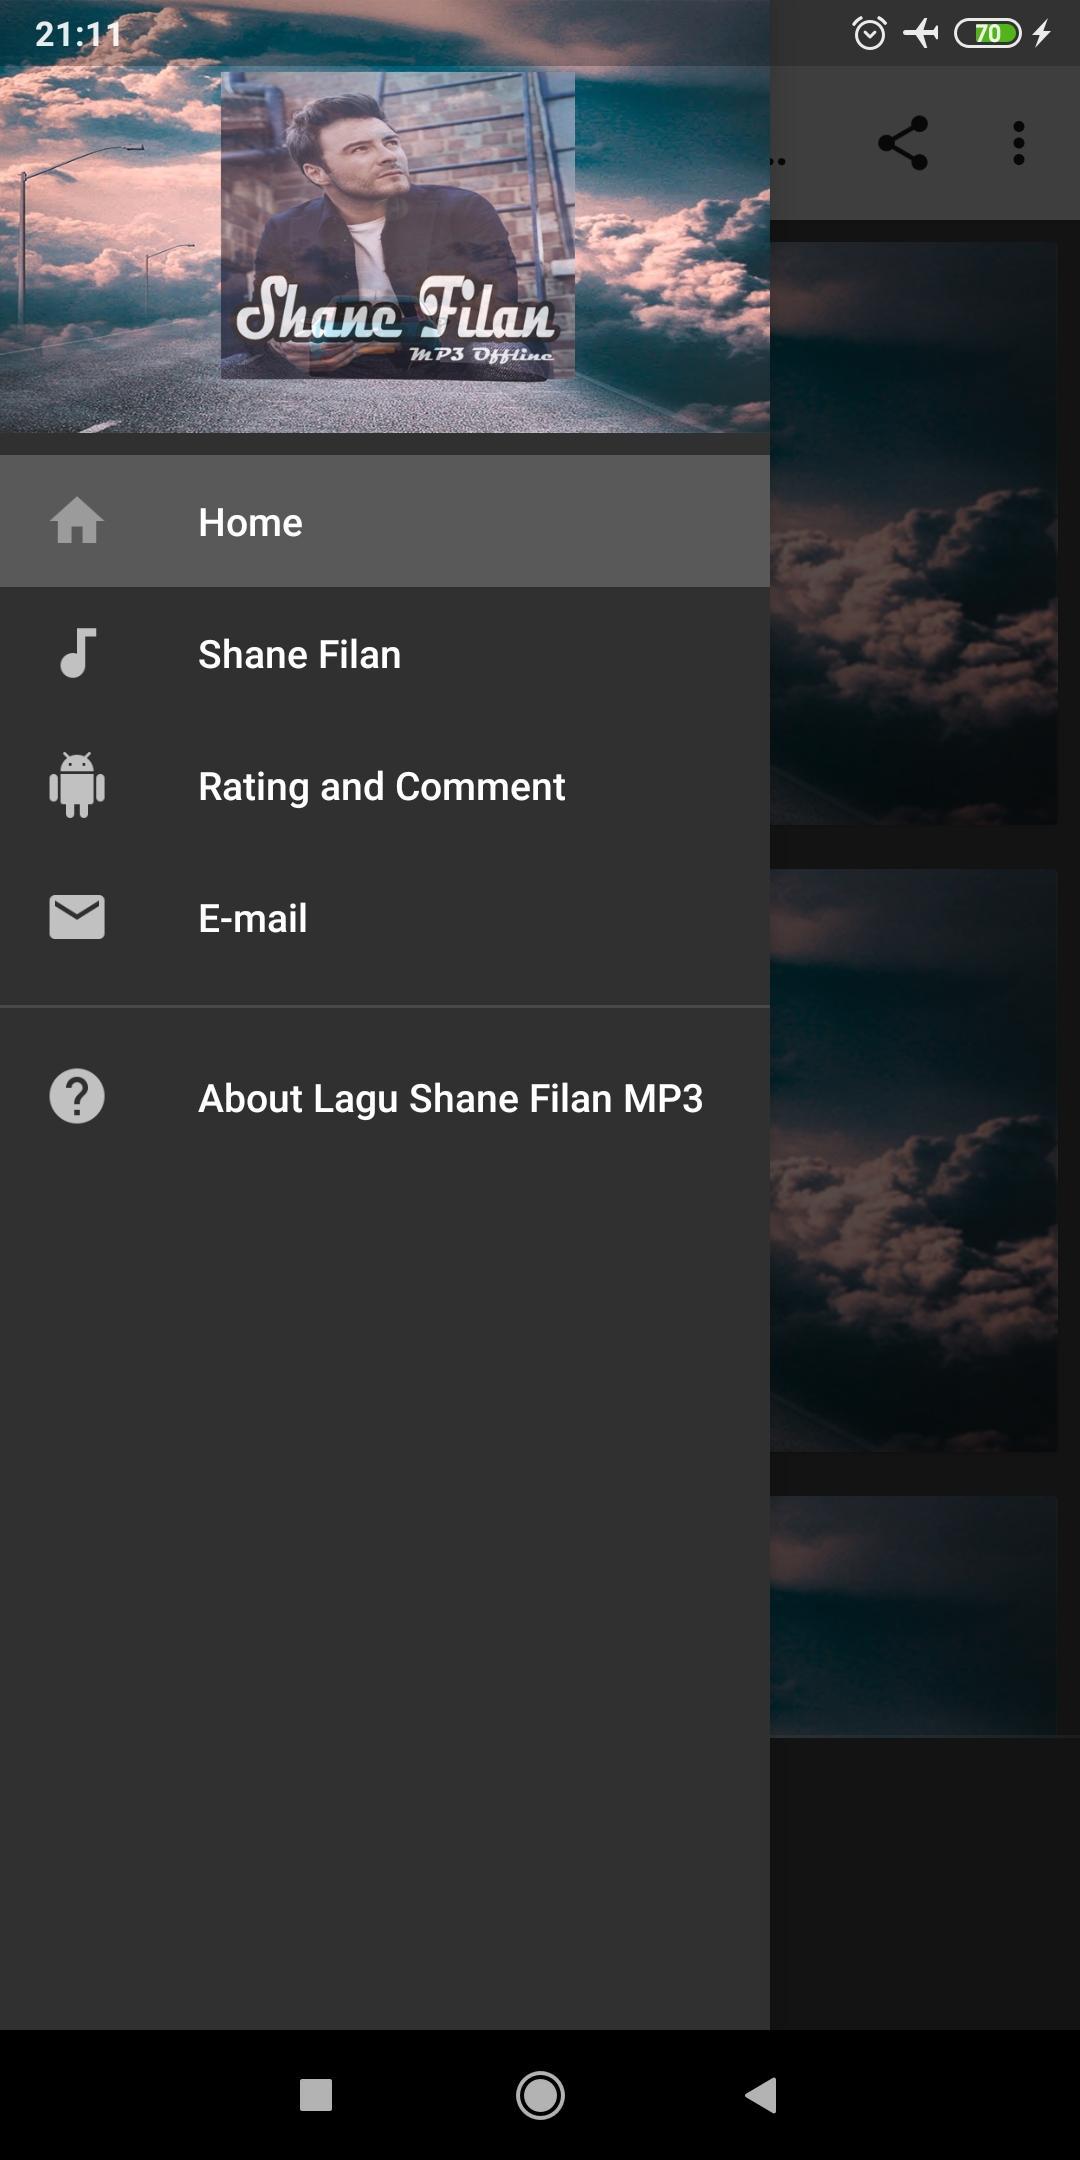 Lagu Shane Filan MP3 Offline for Android - APK Download